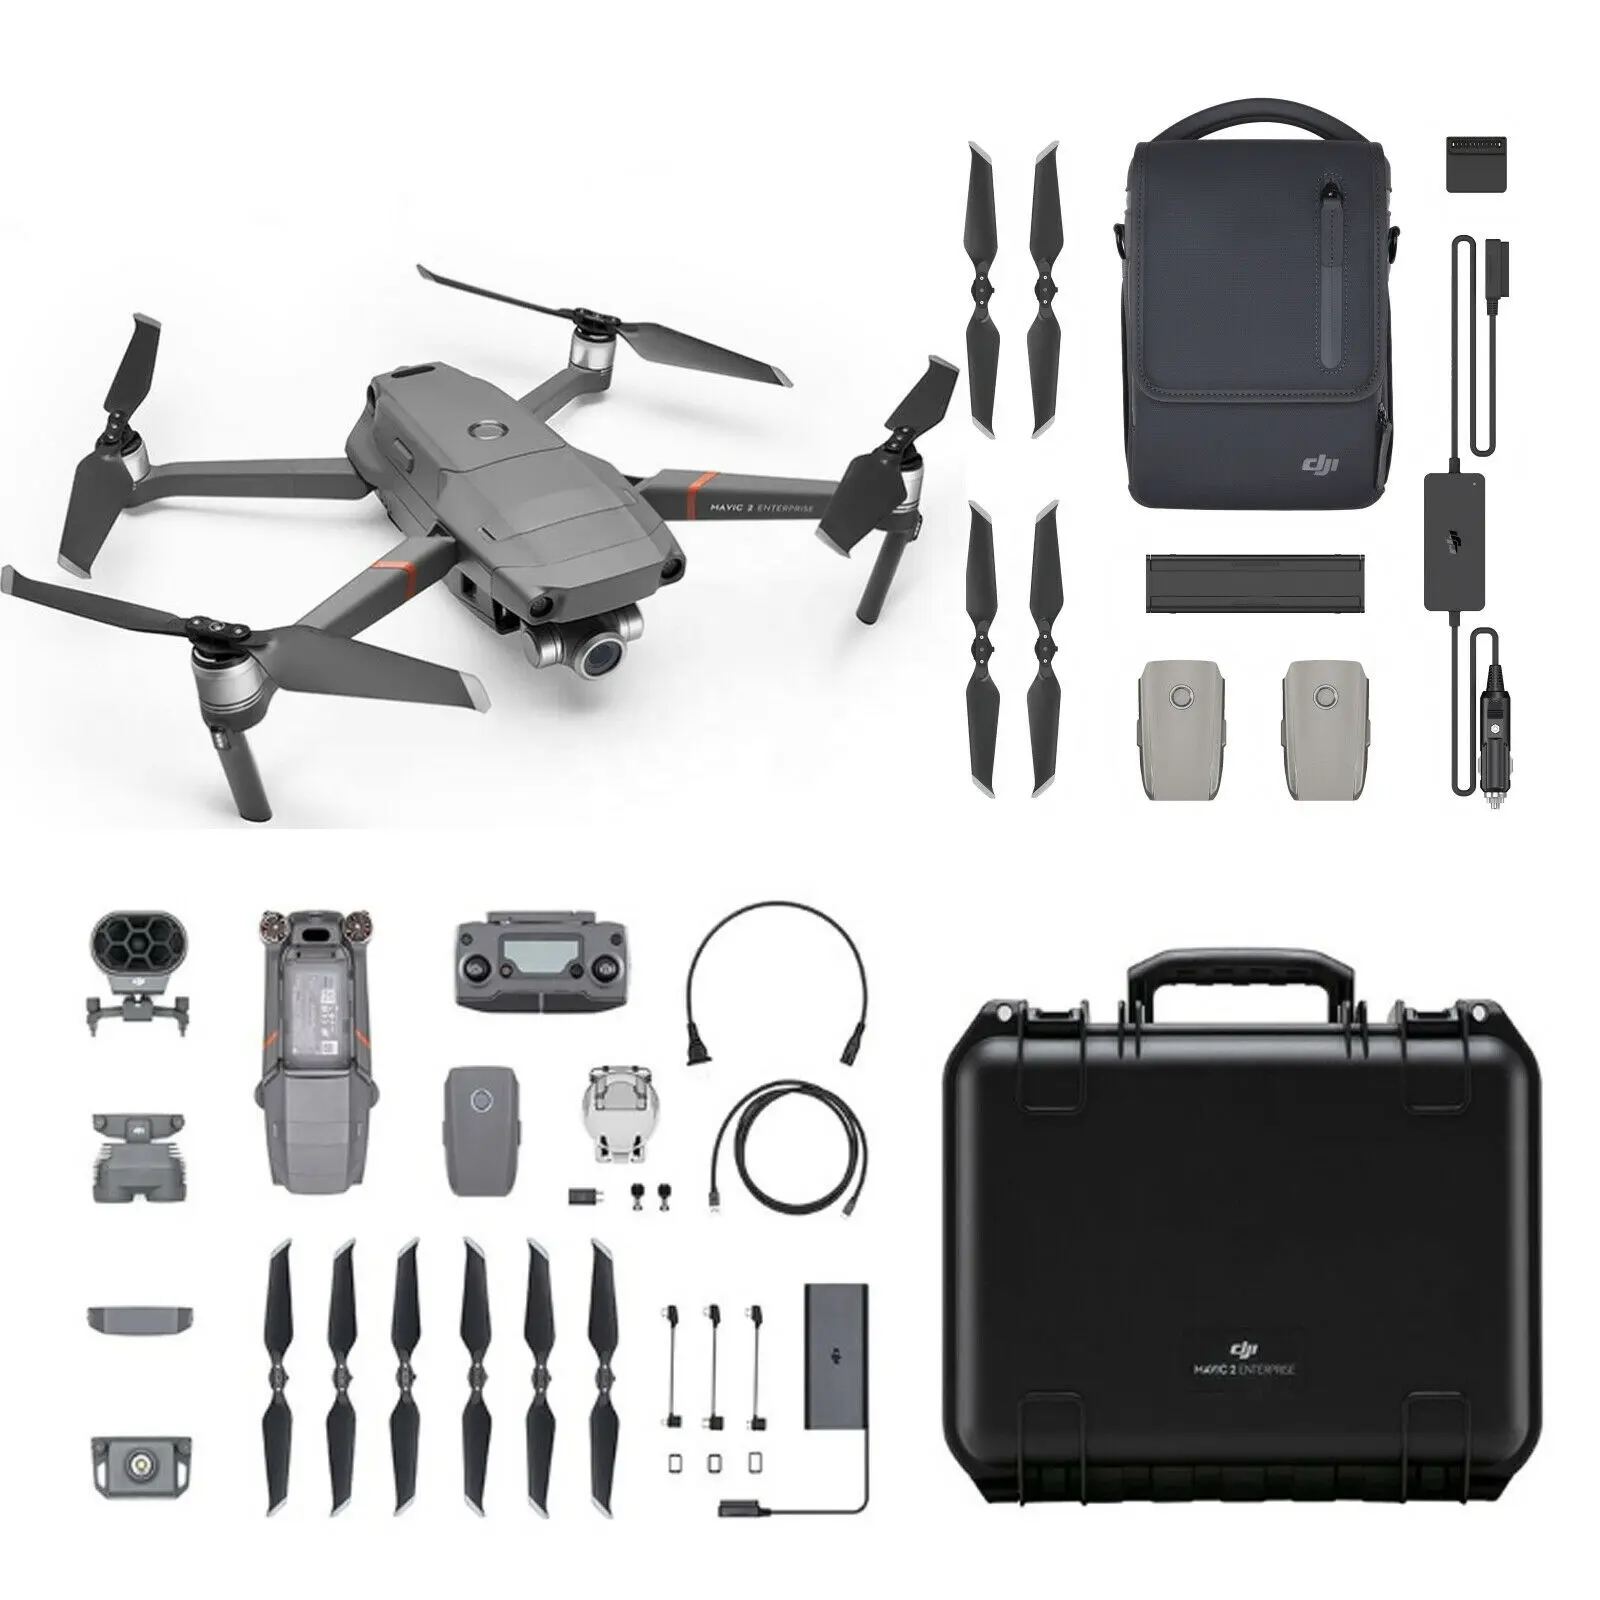 100% Original and Brand New for DJI Mavic 2 Enterprise Zoom 4K Drone & Fly More Combo Kit